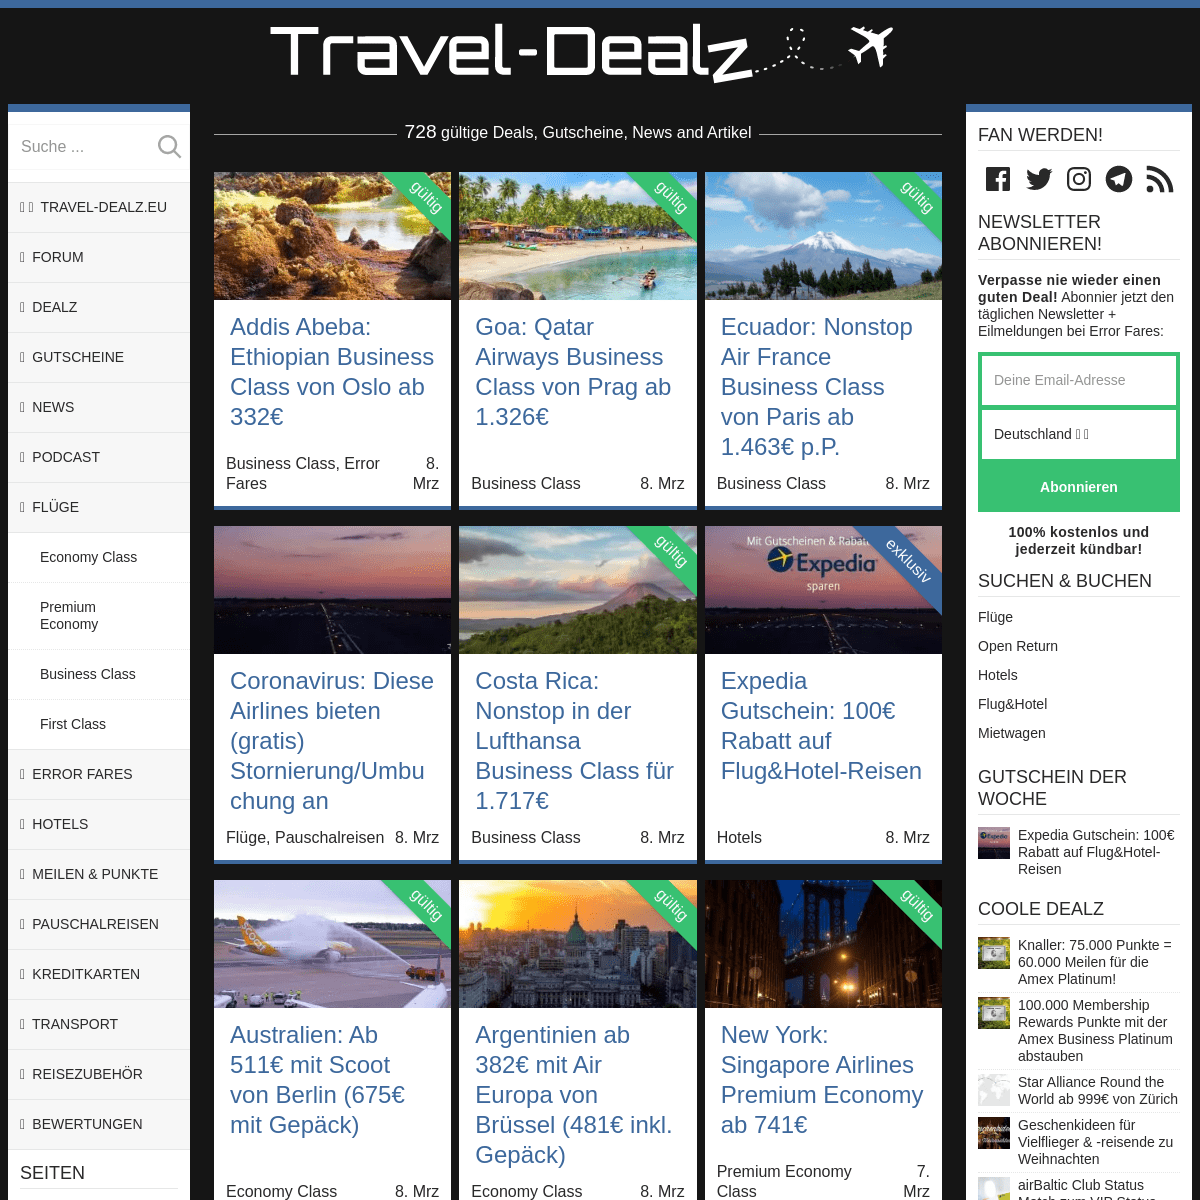 A complete backup of travel-dealz.de